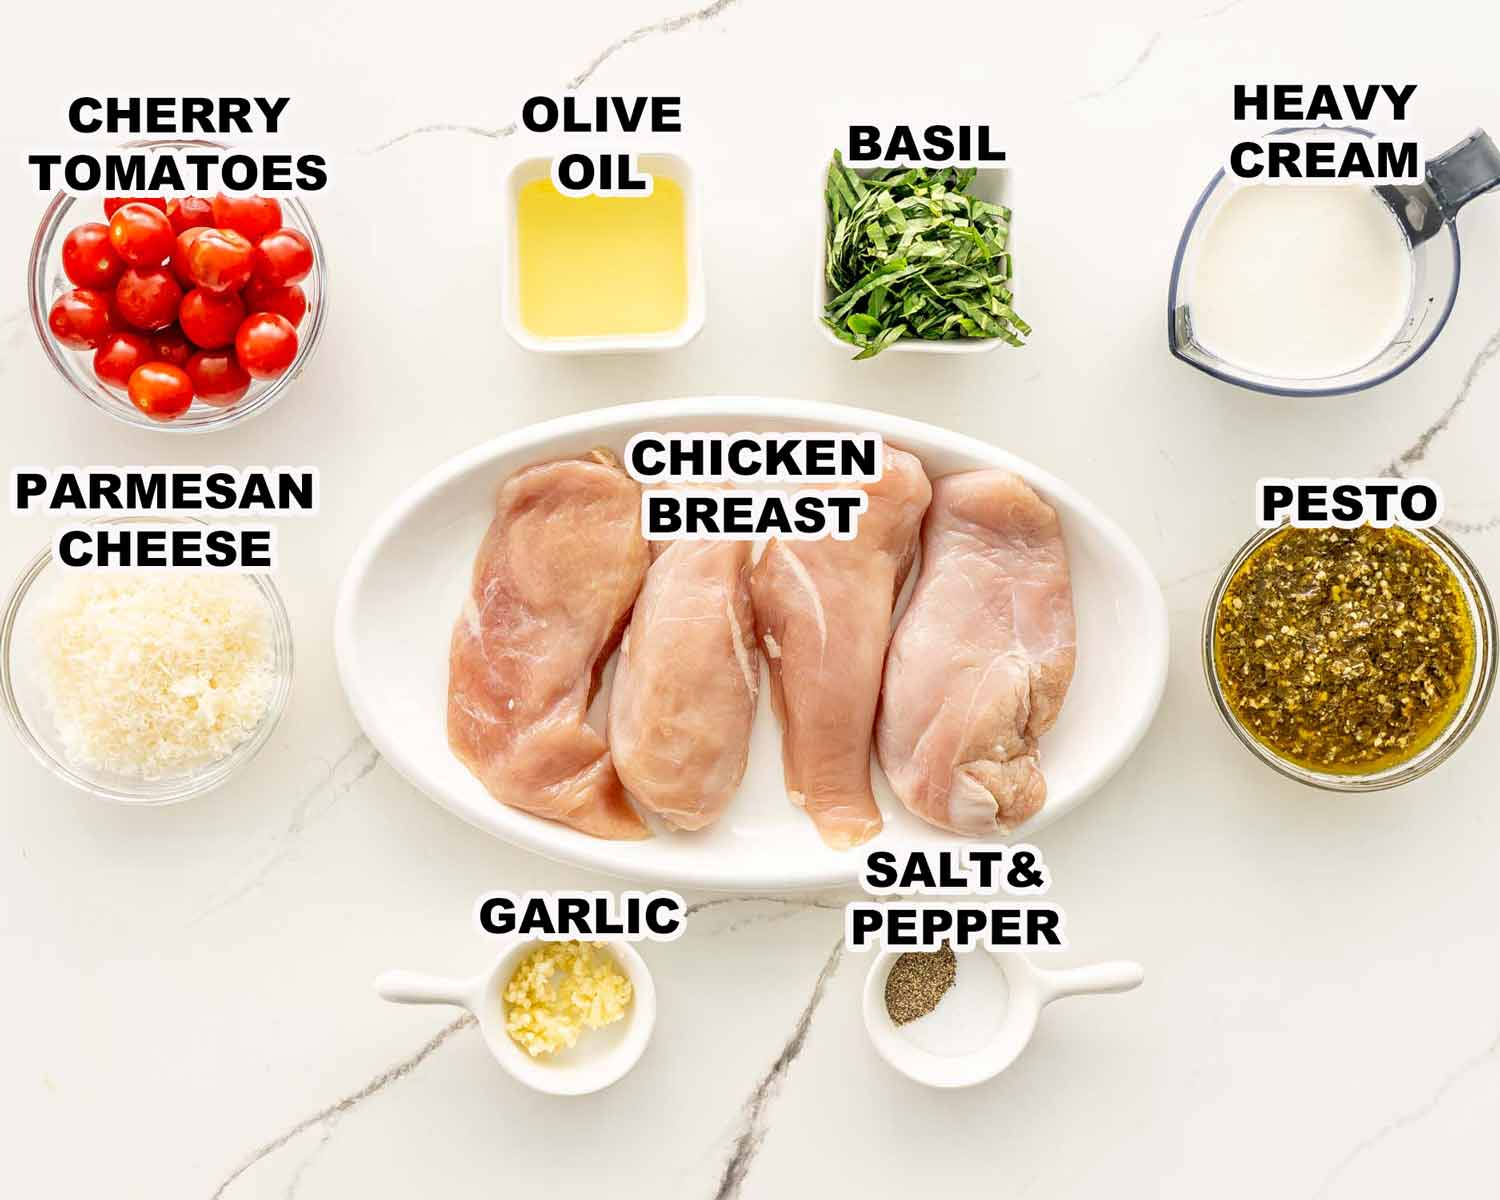 ingredients needed to make creamy pesto chicken.